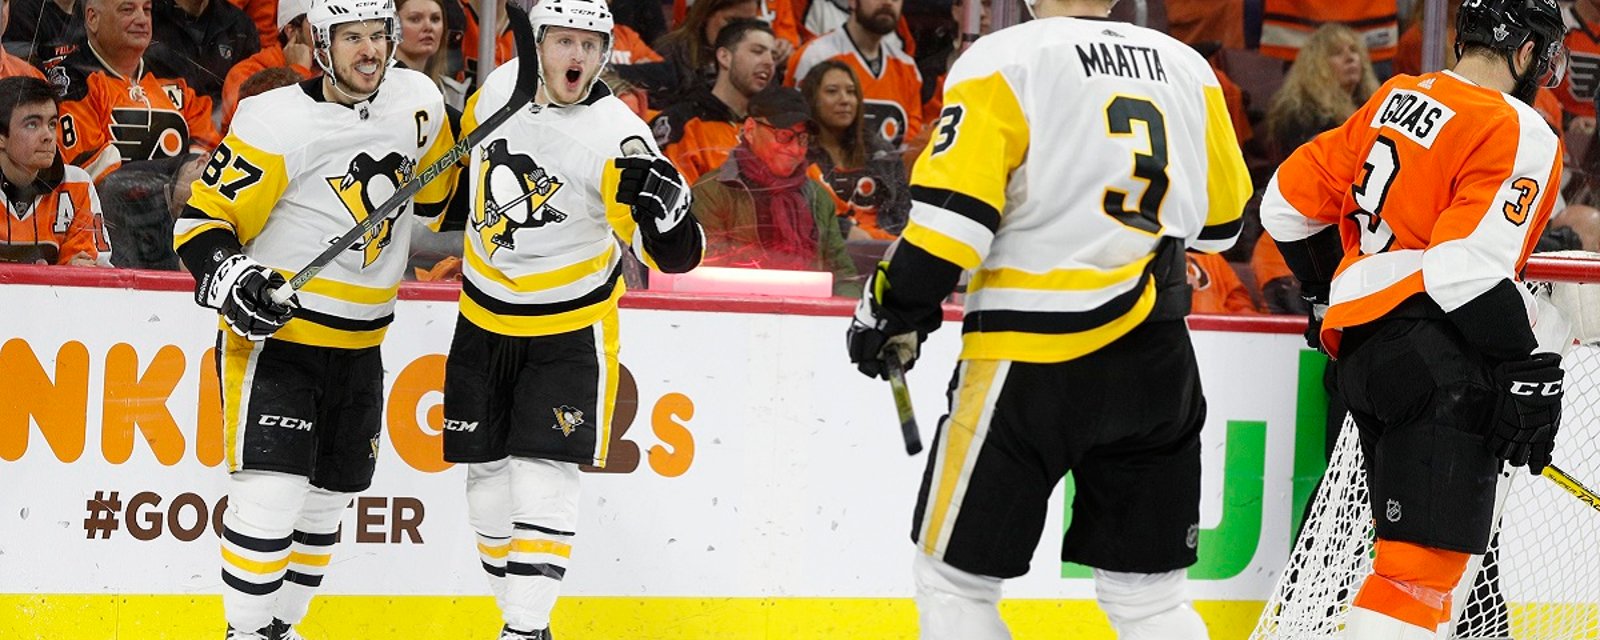 Breaking: The Penguins have traded defenseman Olli Maatta.